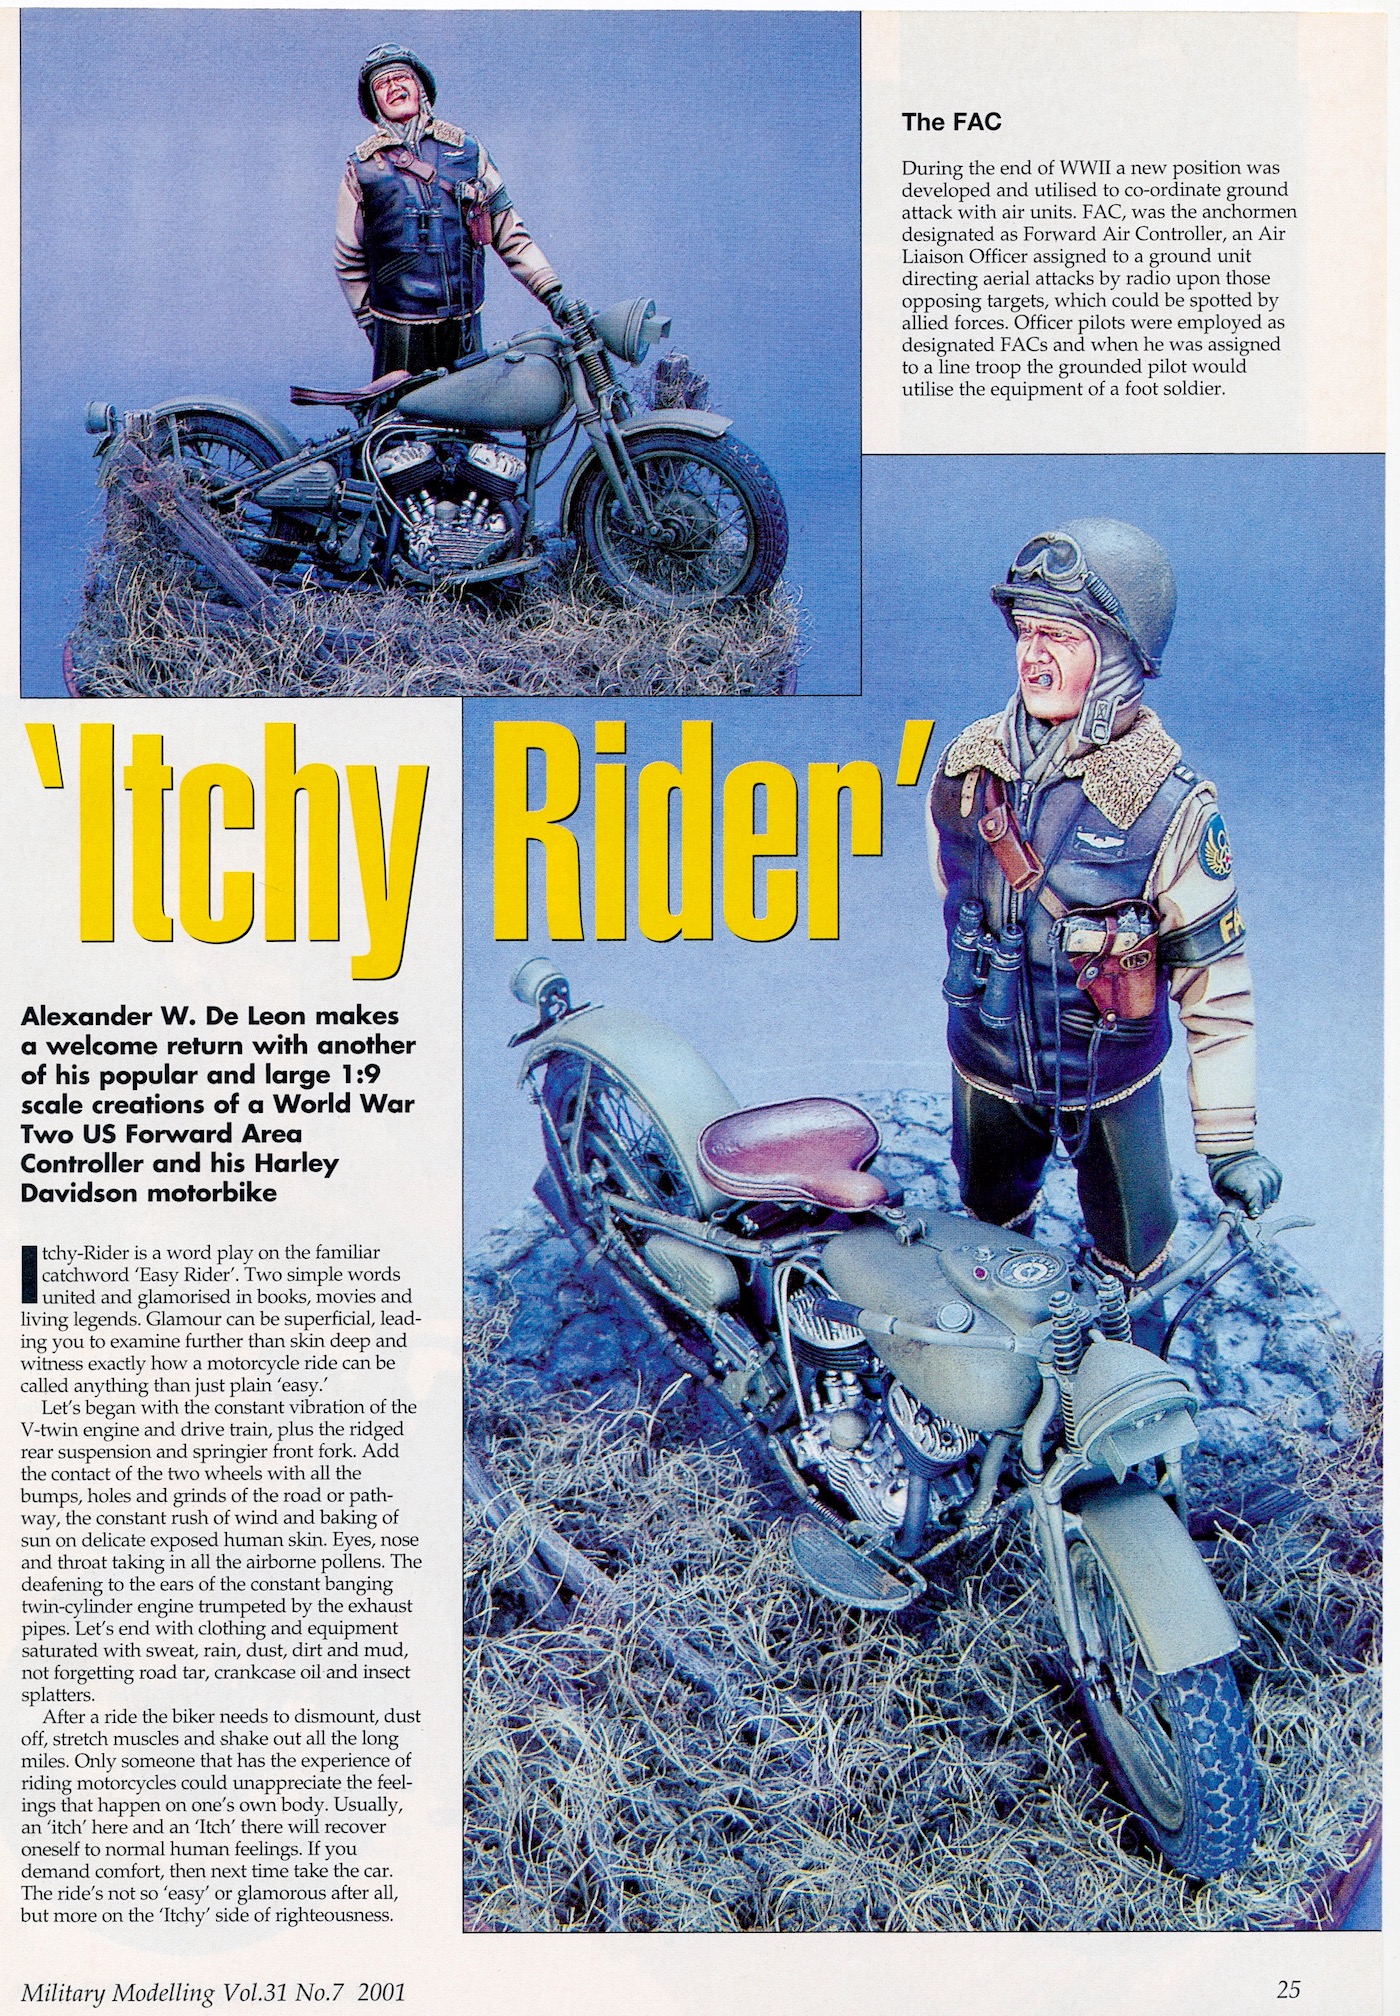 Itchy Rider00001.jpeg